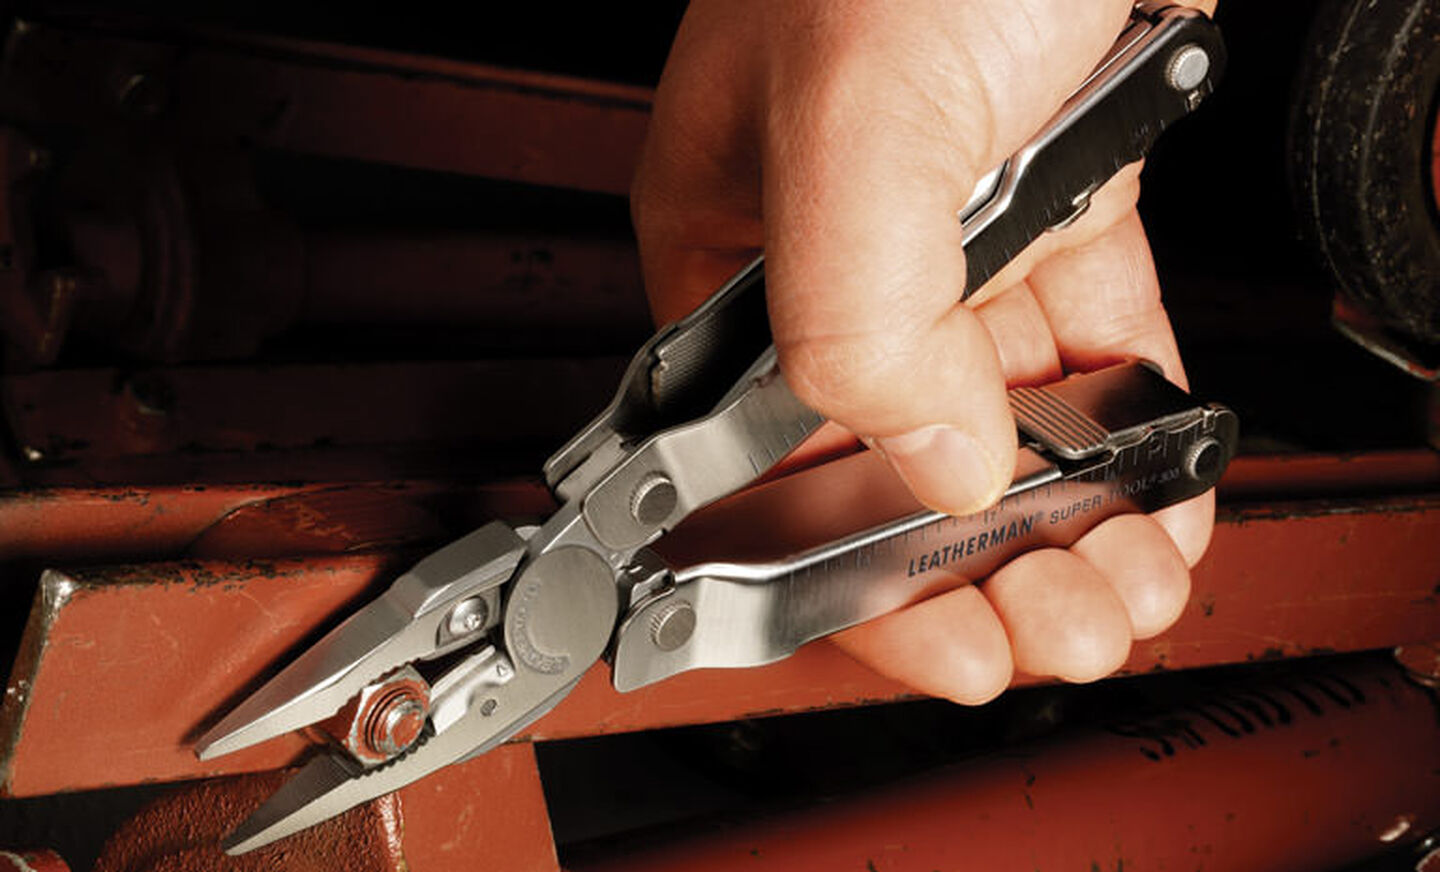 Leatherman stainless steel heritage super tool 300 multi-tool in hand, pliers in use